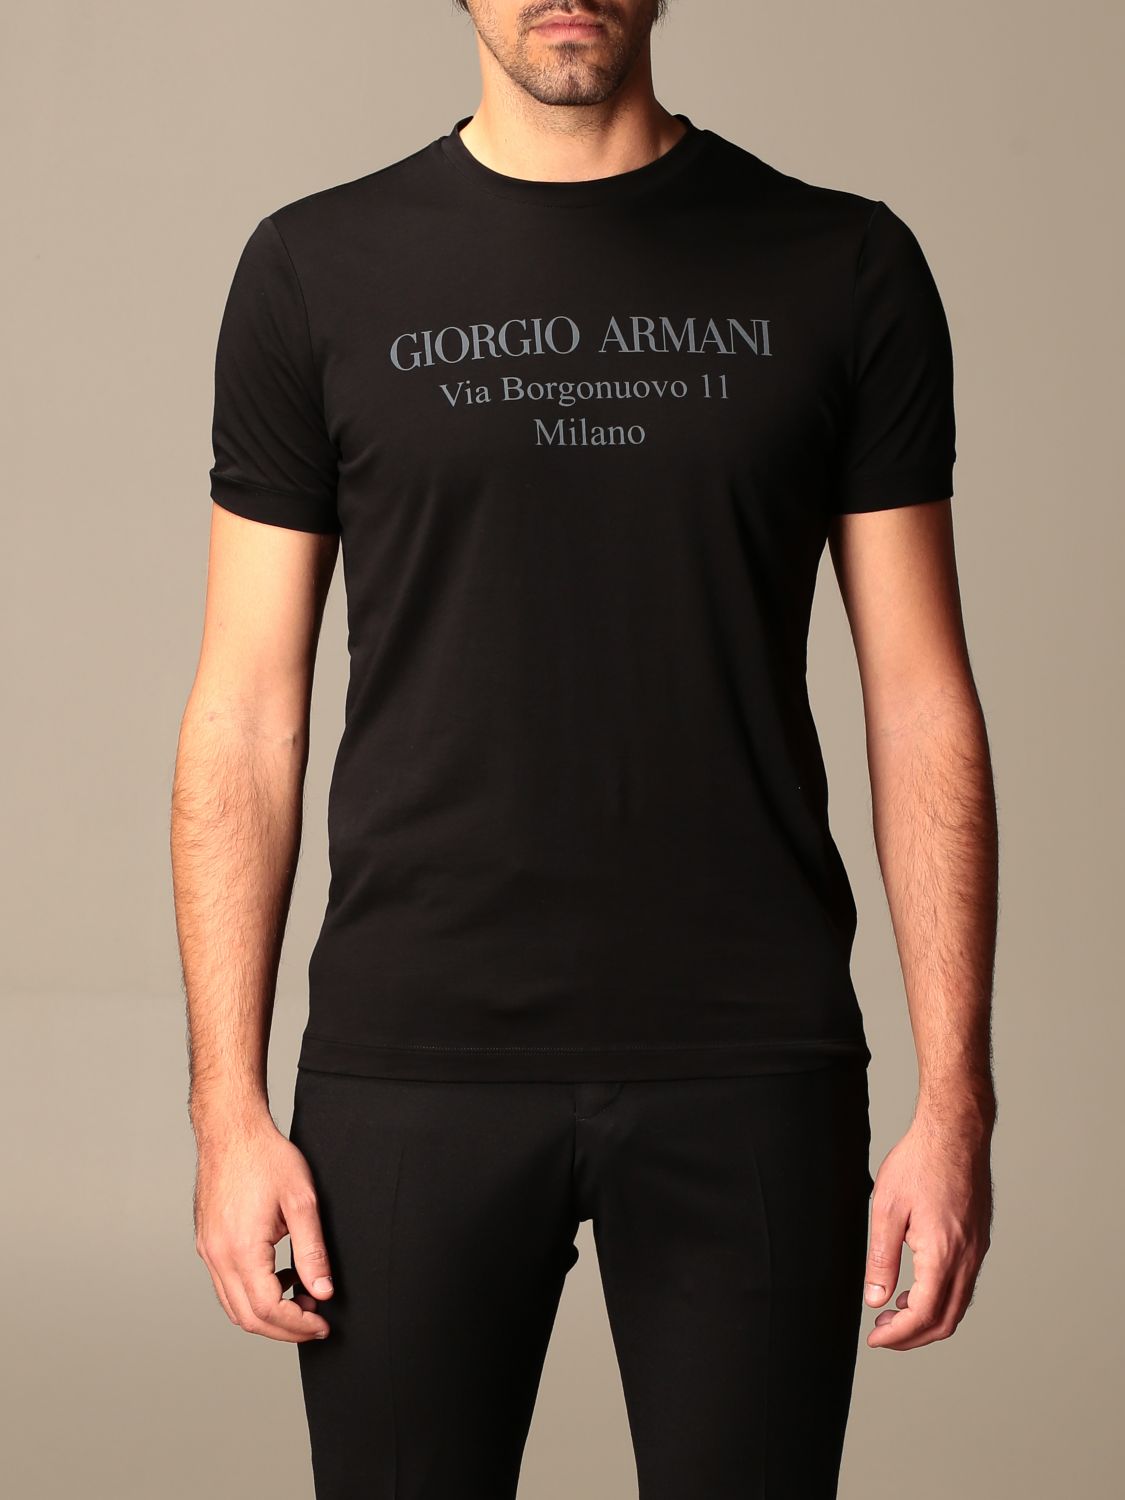 Giorgio Armani T Shirts Cheap Sale, SAVE 60%.